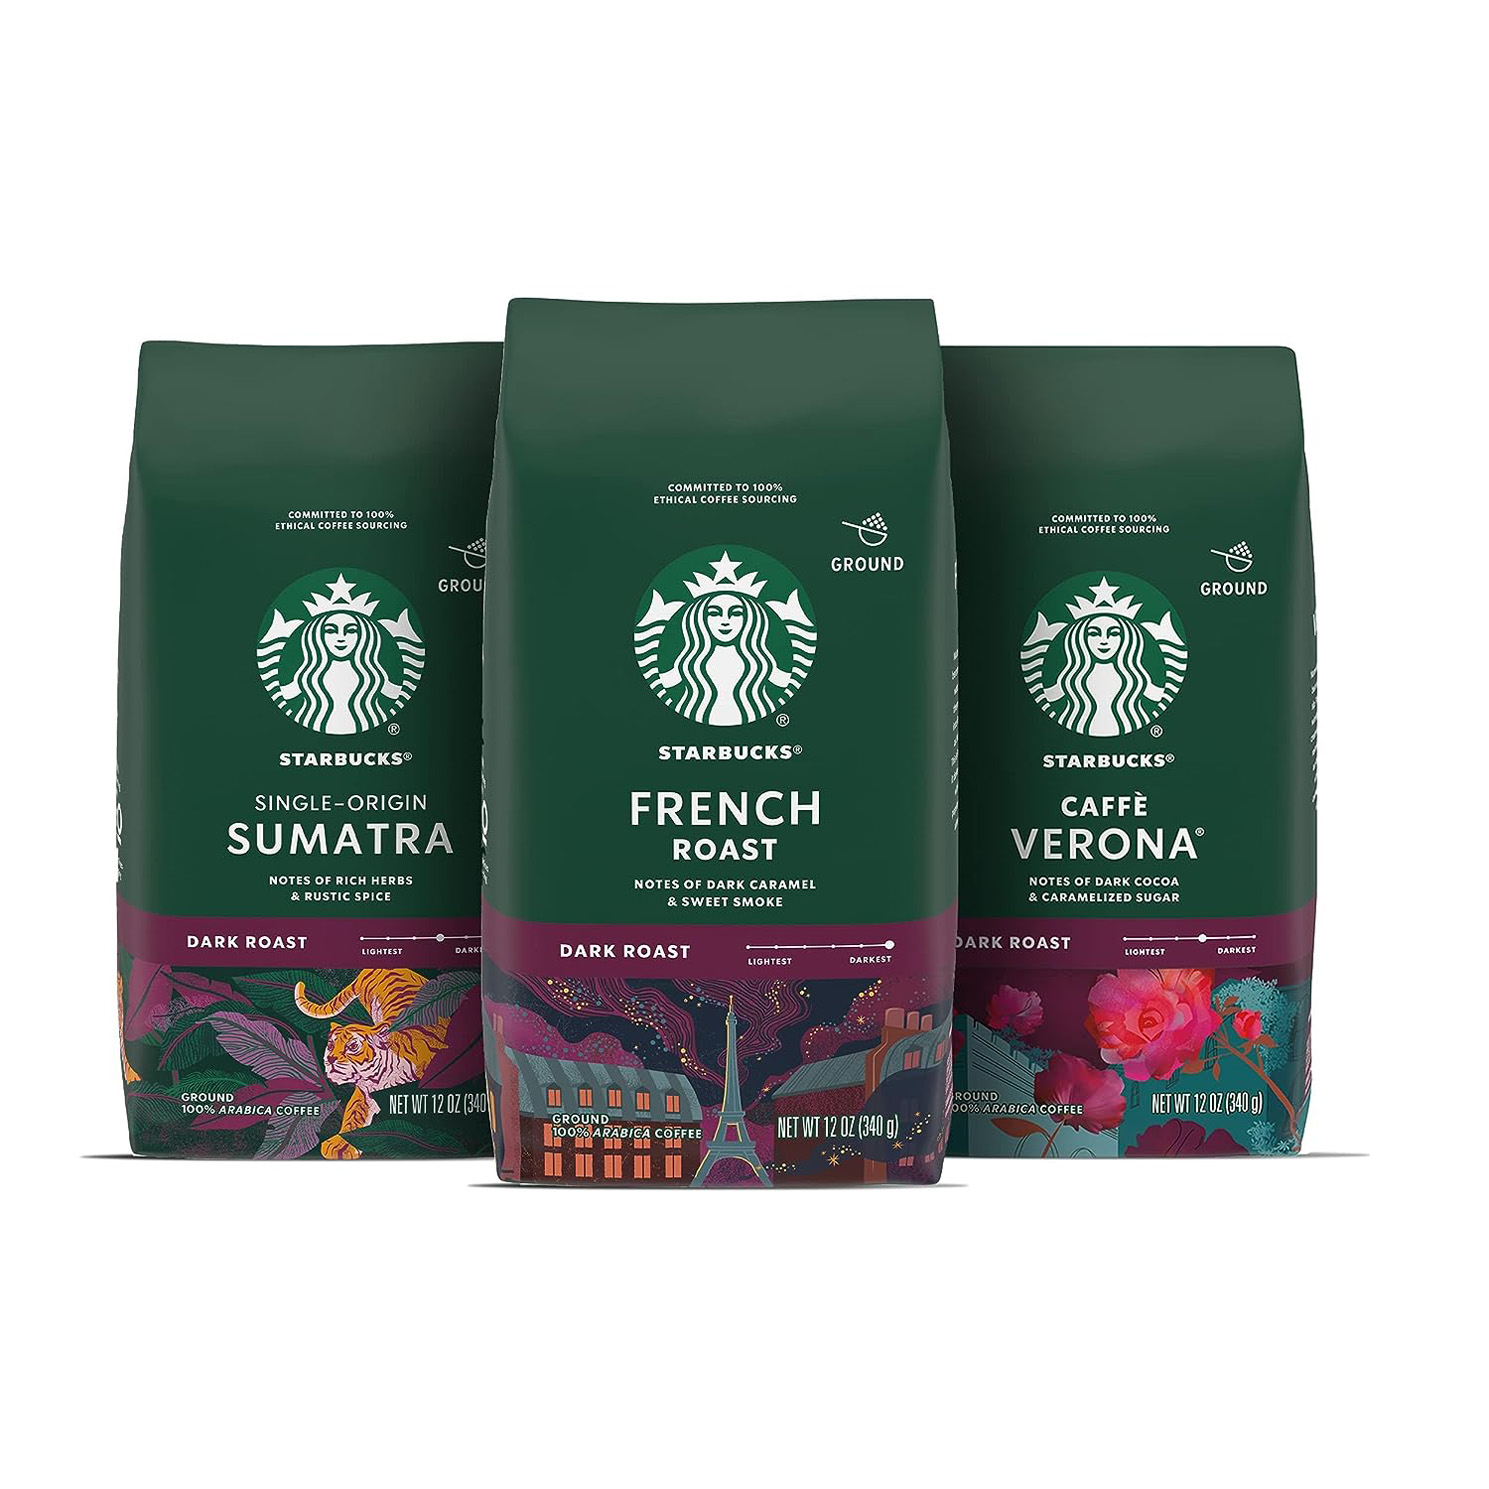 Starbucks Dark Roast Ground Coffee Variety Pack 3 bags